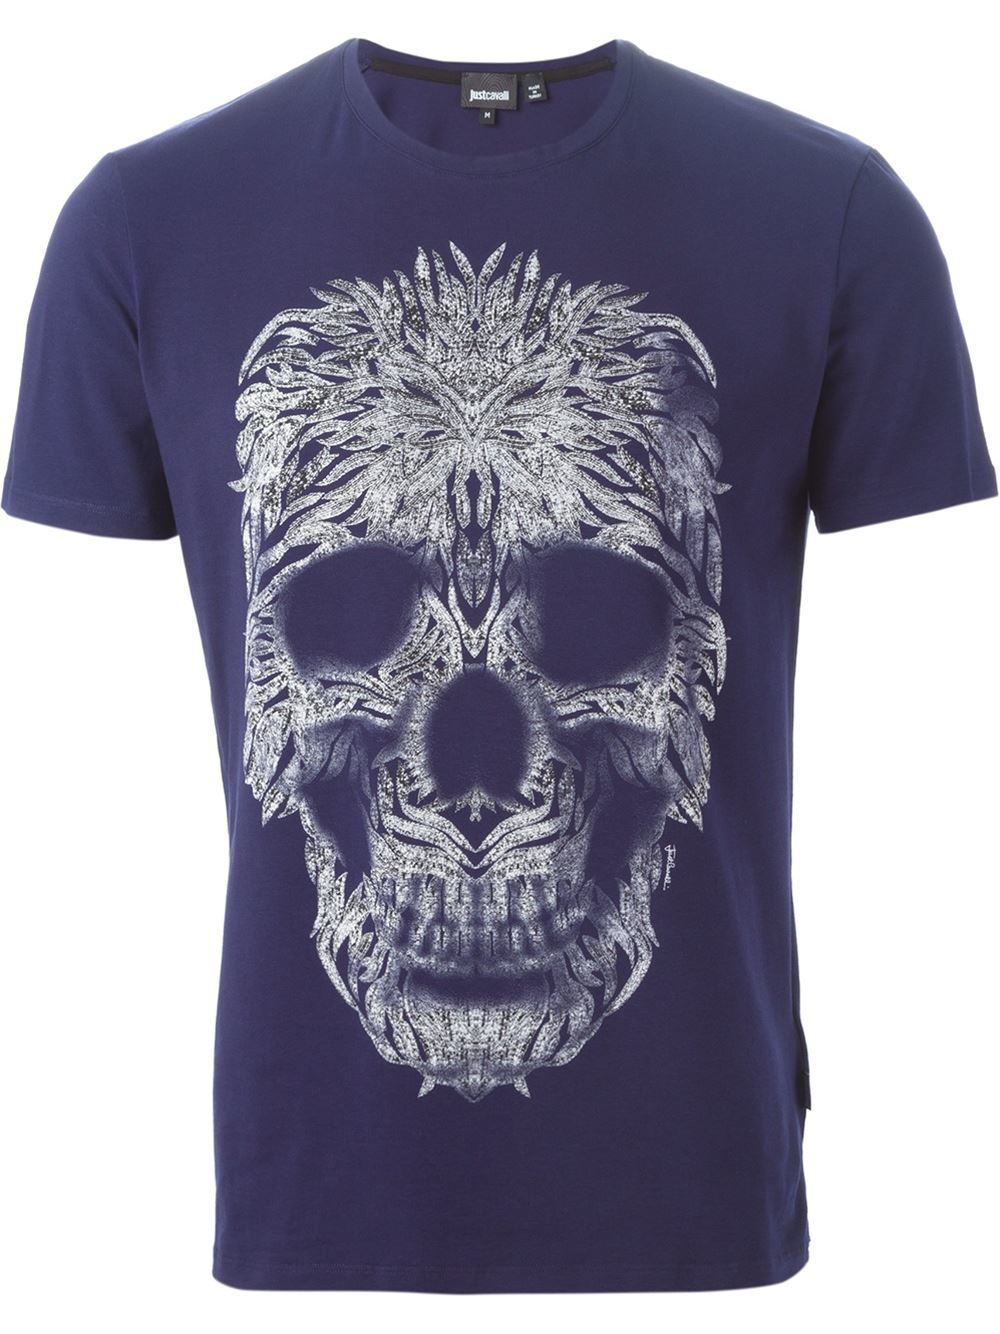 Lyst - Just Cavalli Skull Print T-shirt in Blue for Men